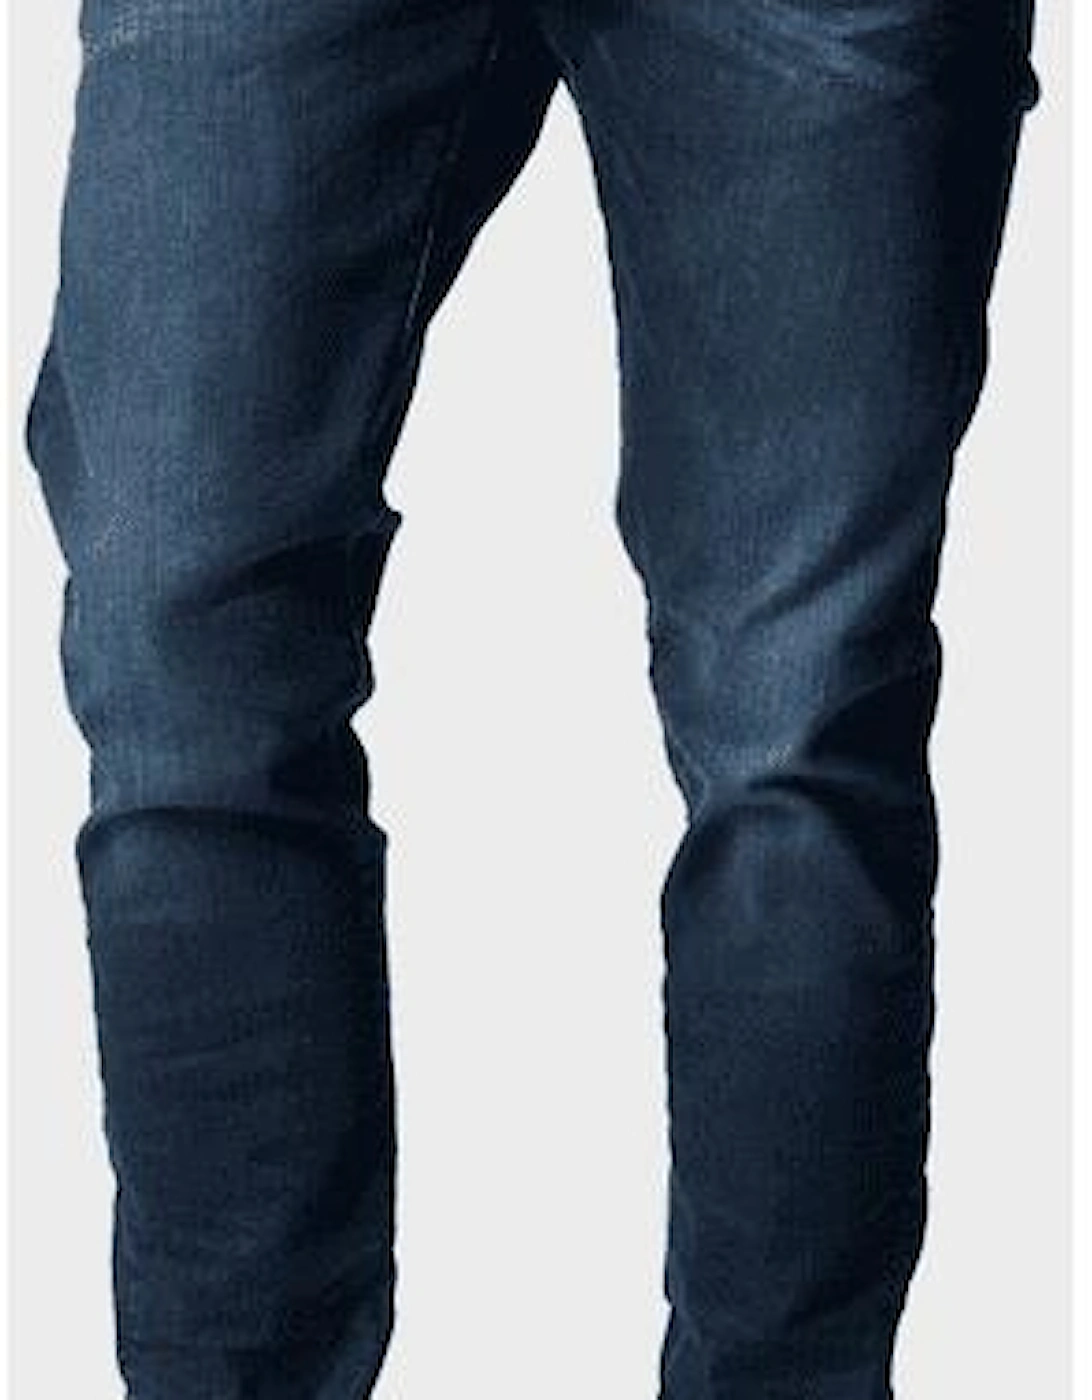 LAK 517 Slim Fit Dark Blue Jeans